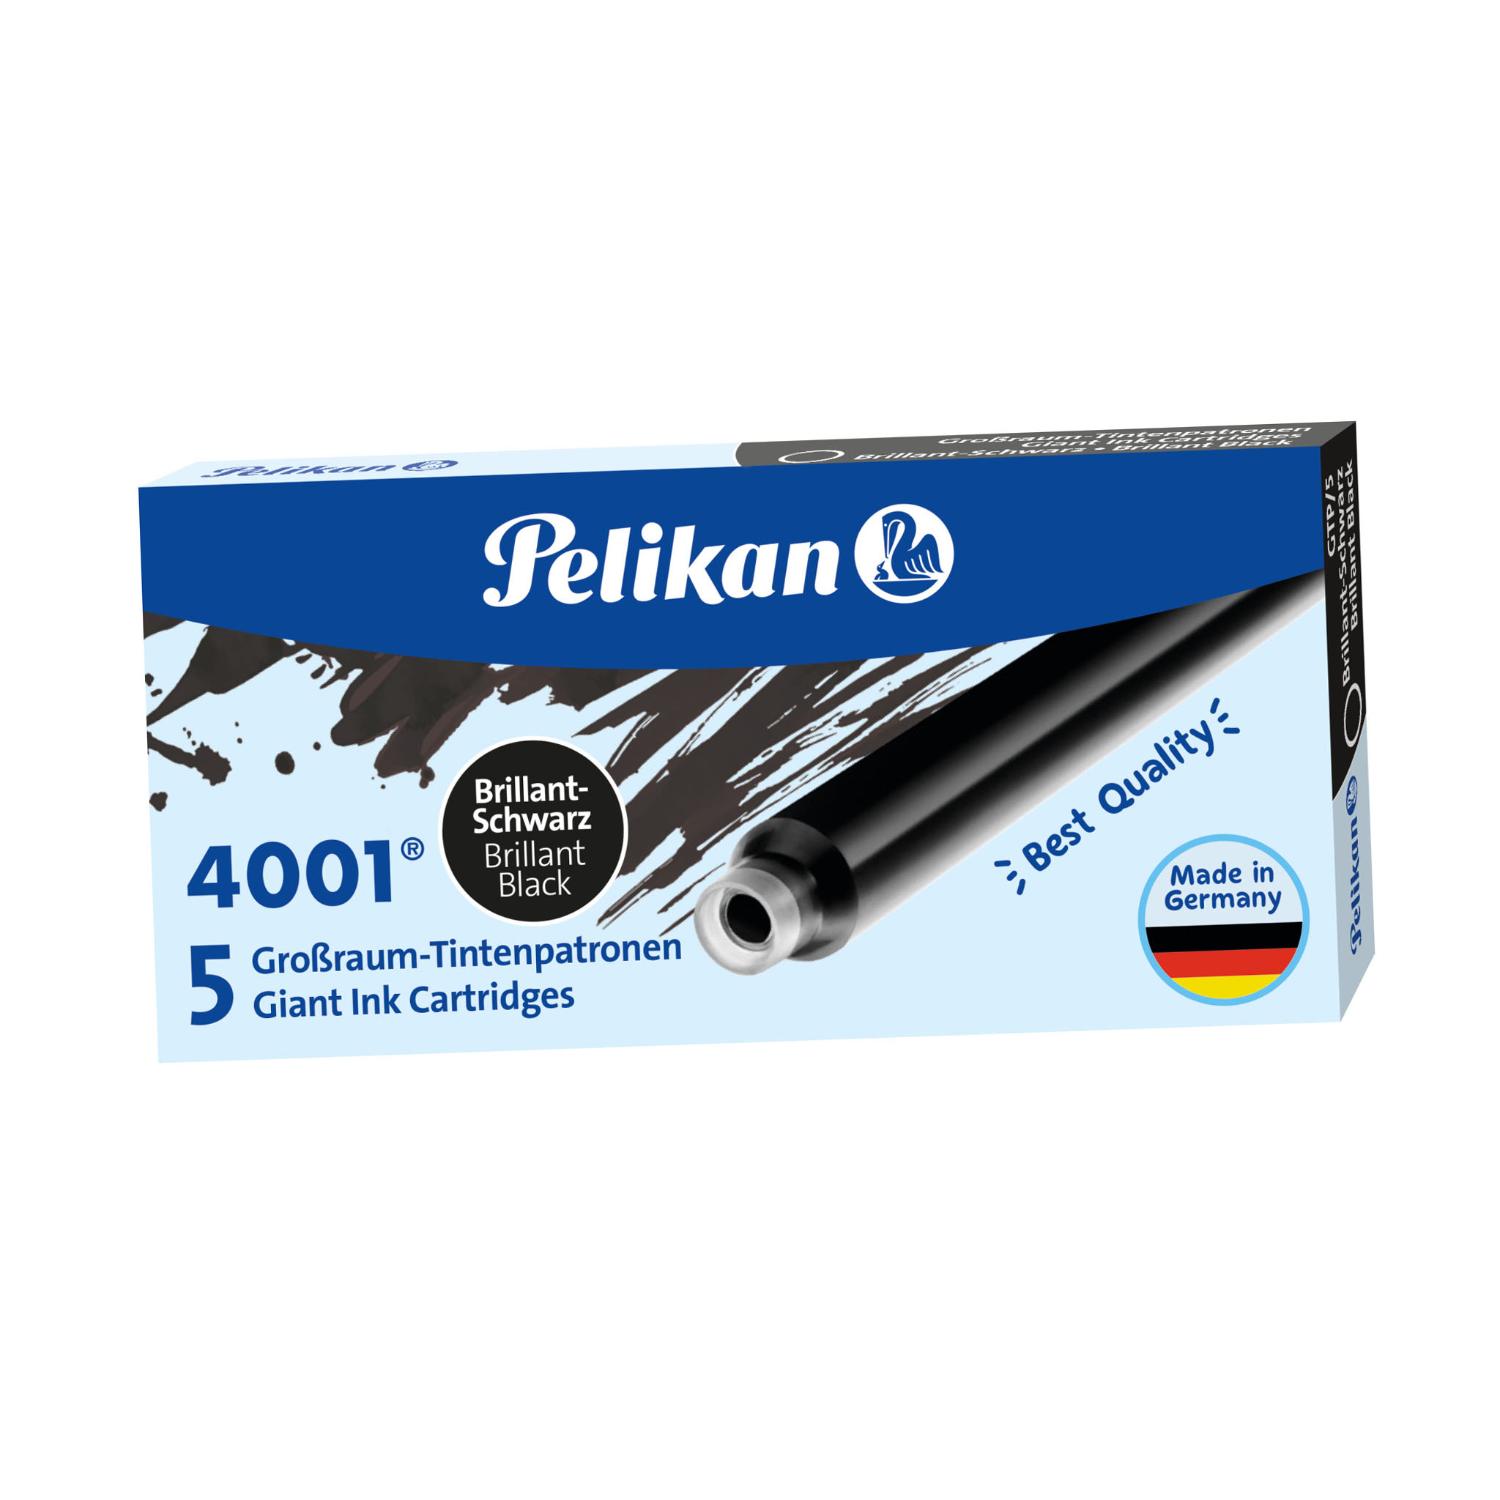 Pelikan Groraum-Tintenpatronen 4001 GTP/5, schwarz